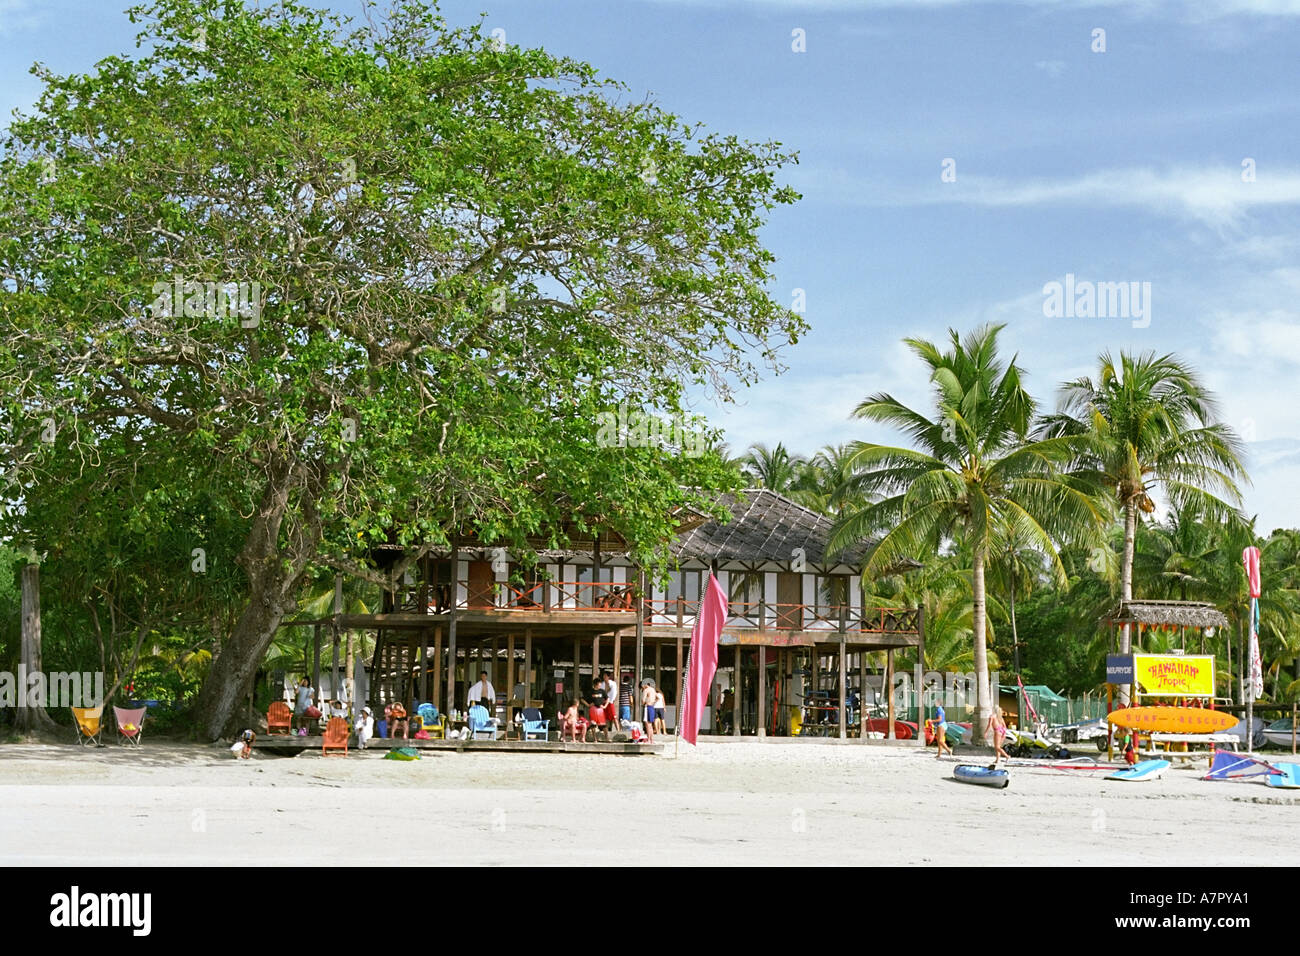 Mana Mana Beach Club. Bintan island, Indonesia. Stock Photo